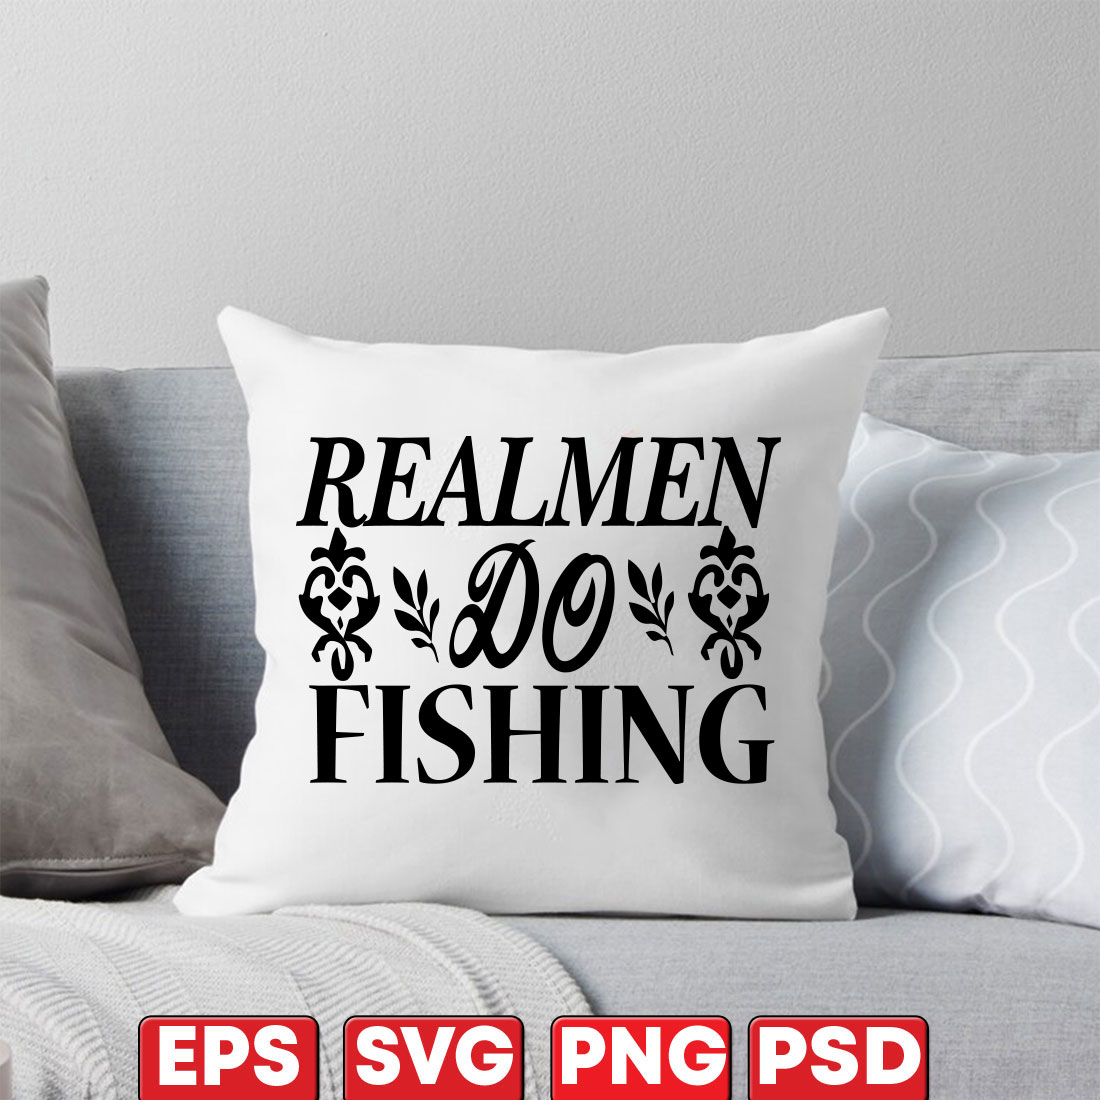 Realmen-do-fishing cover image.